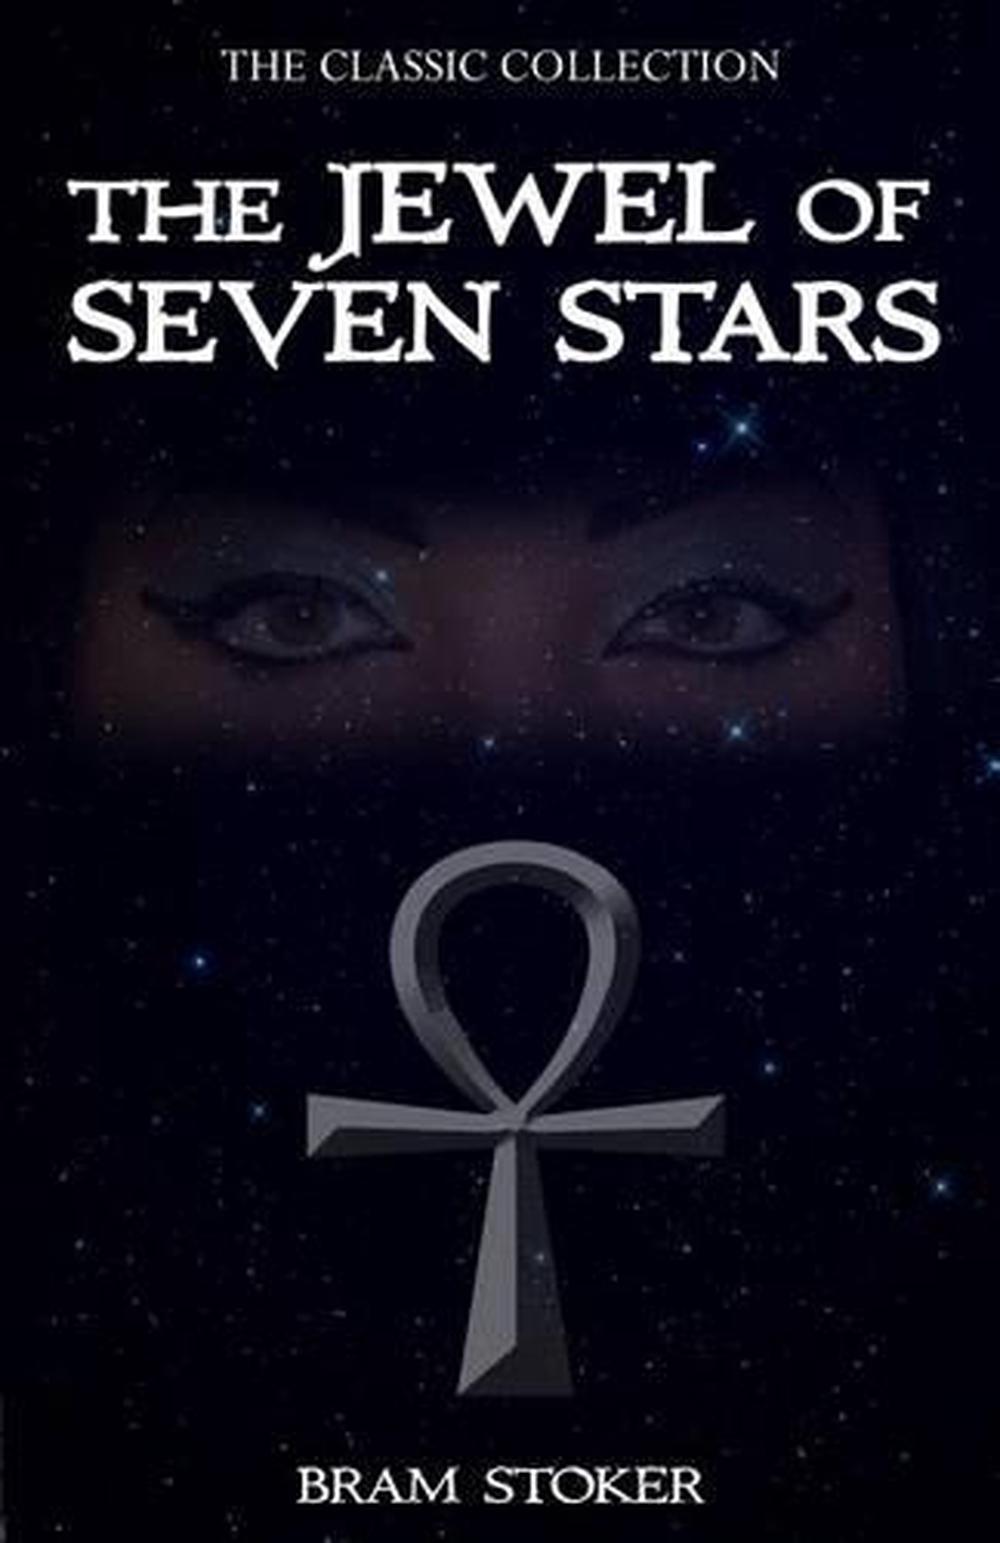 the jewel of seven stars by bram stoker